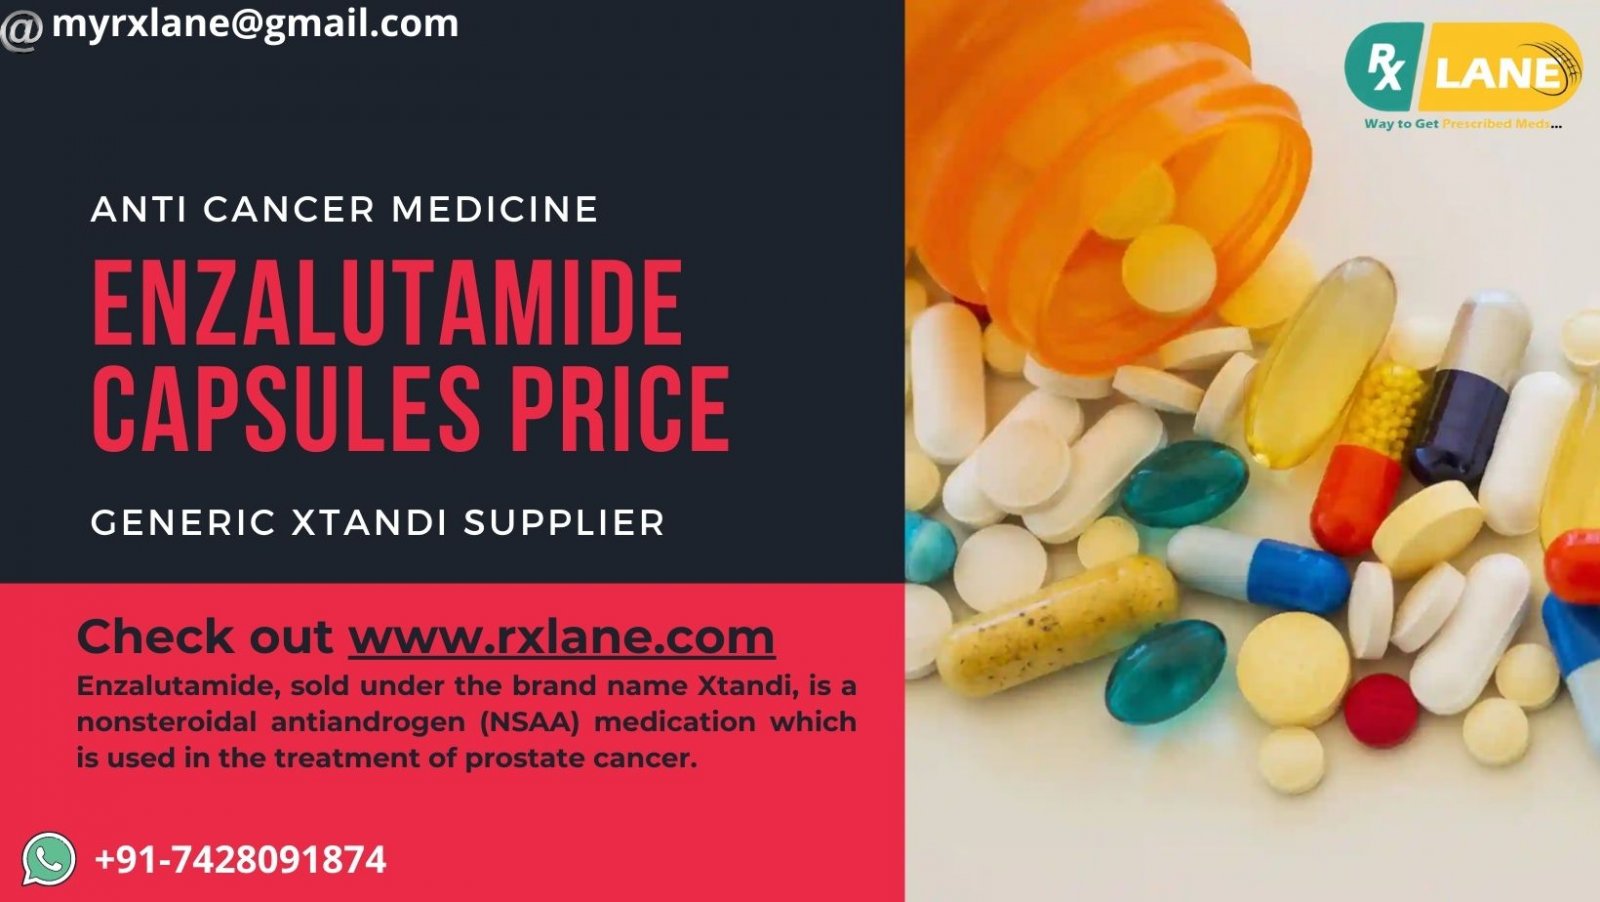 Enzalutamide capsules Wholesale Price Generic Xtandi Supplier Philippines Thailand Hong Kong